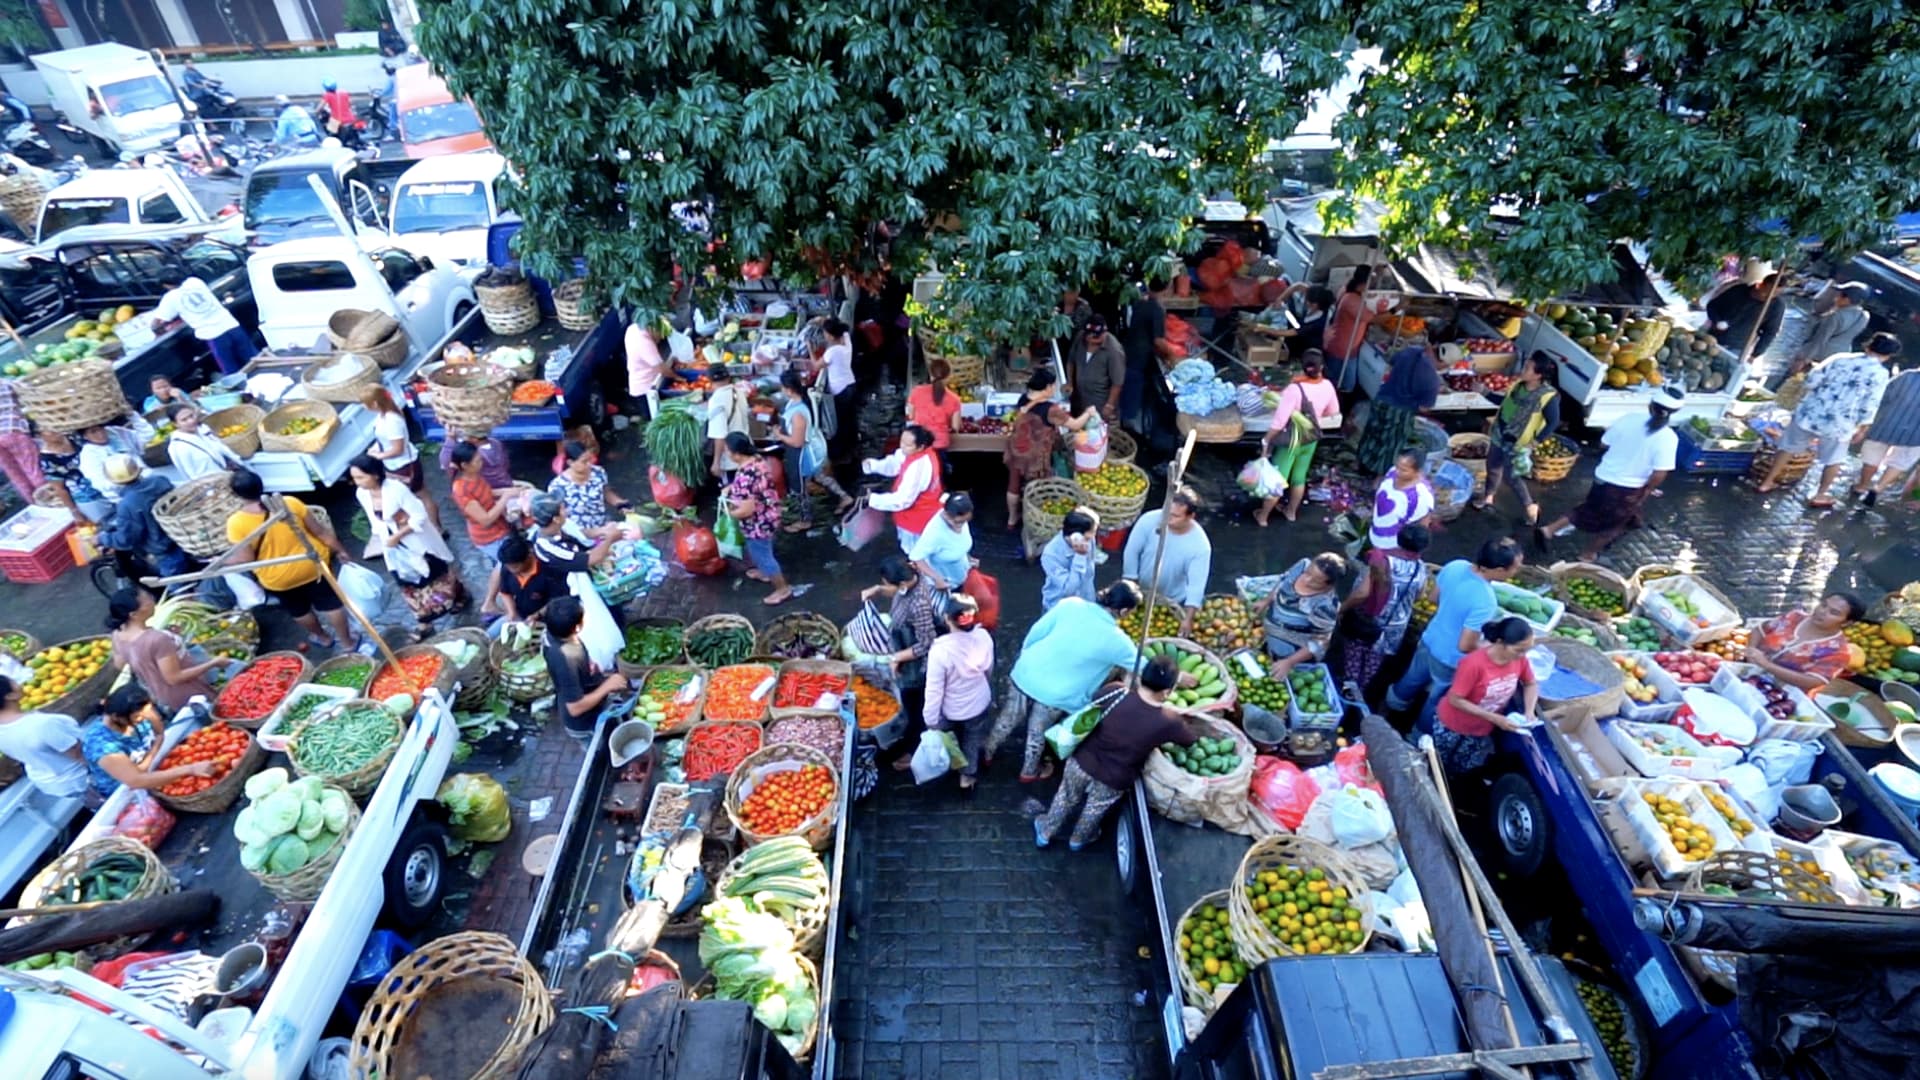 Street vendors sell fresh produce at an Indonesian market.